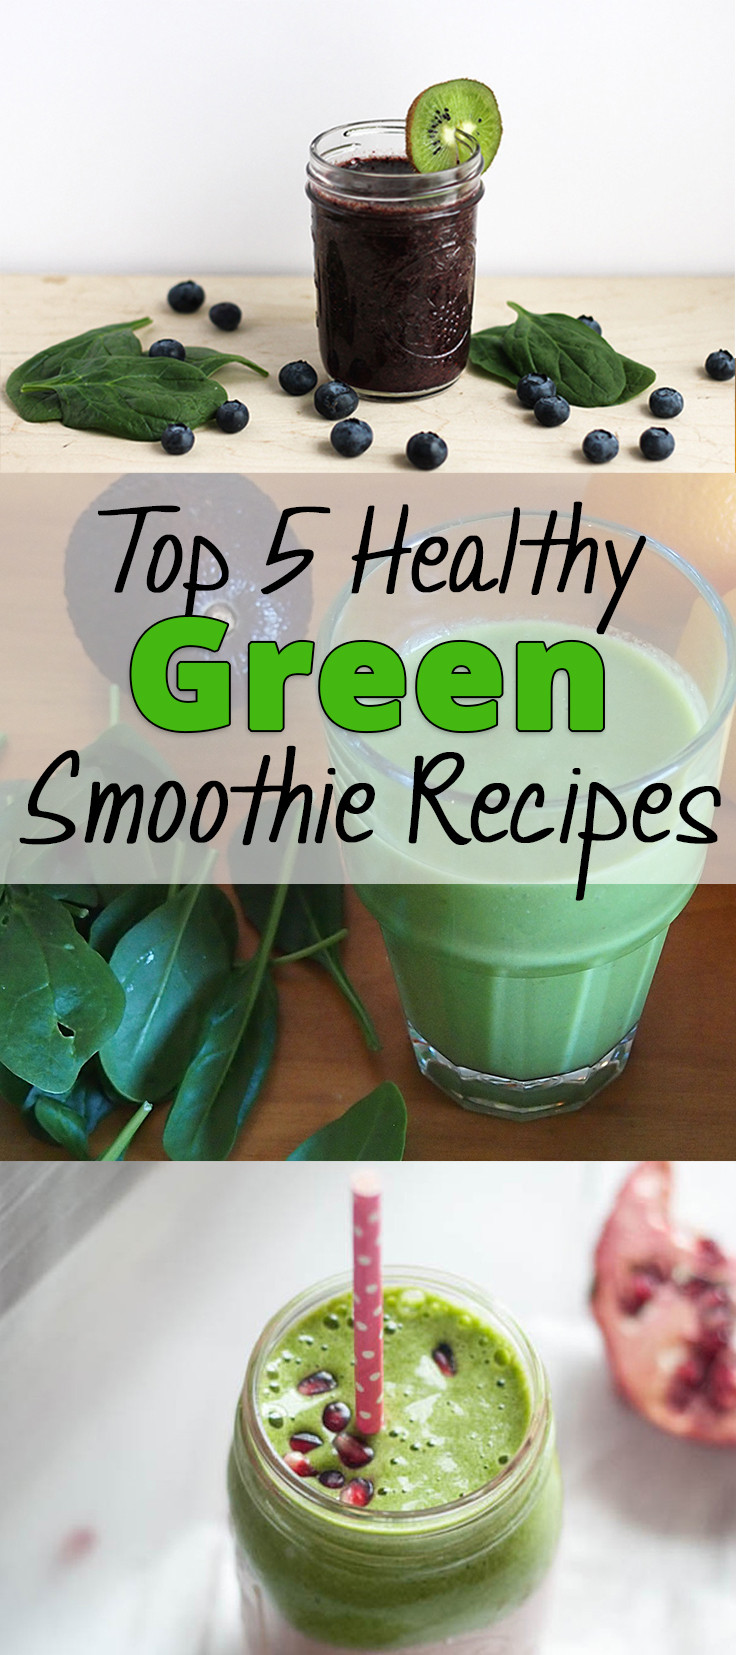 Healthy Green Smoothie Recipes
 Top 5 Healthy Green Smoothie Recipes Brick & Glitter